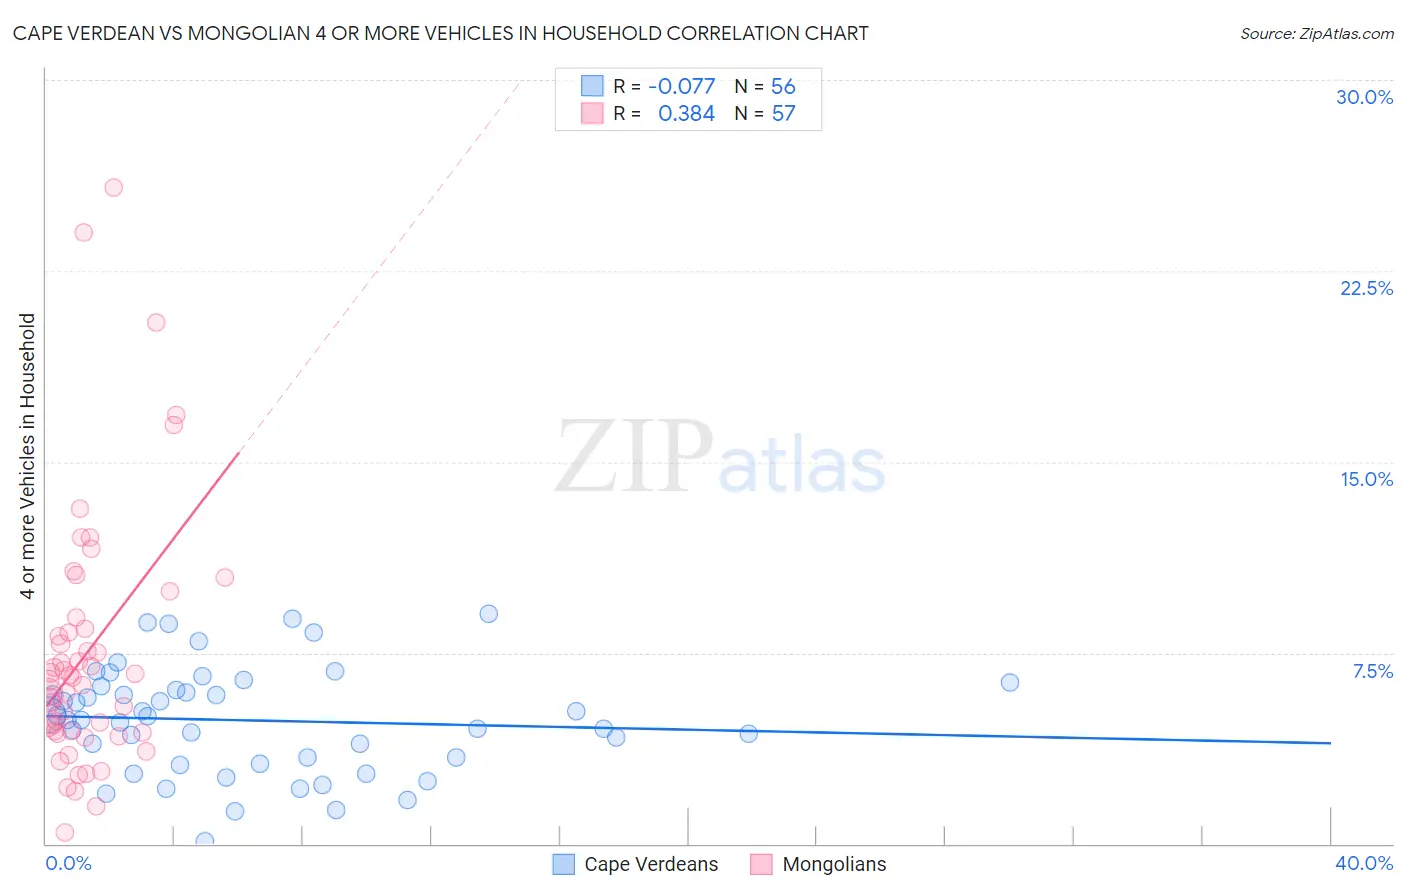 Cape Verdean vs Mongolian 4 or more Vehicles in Household